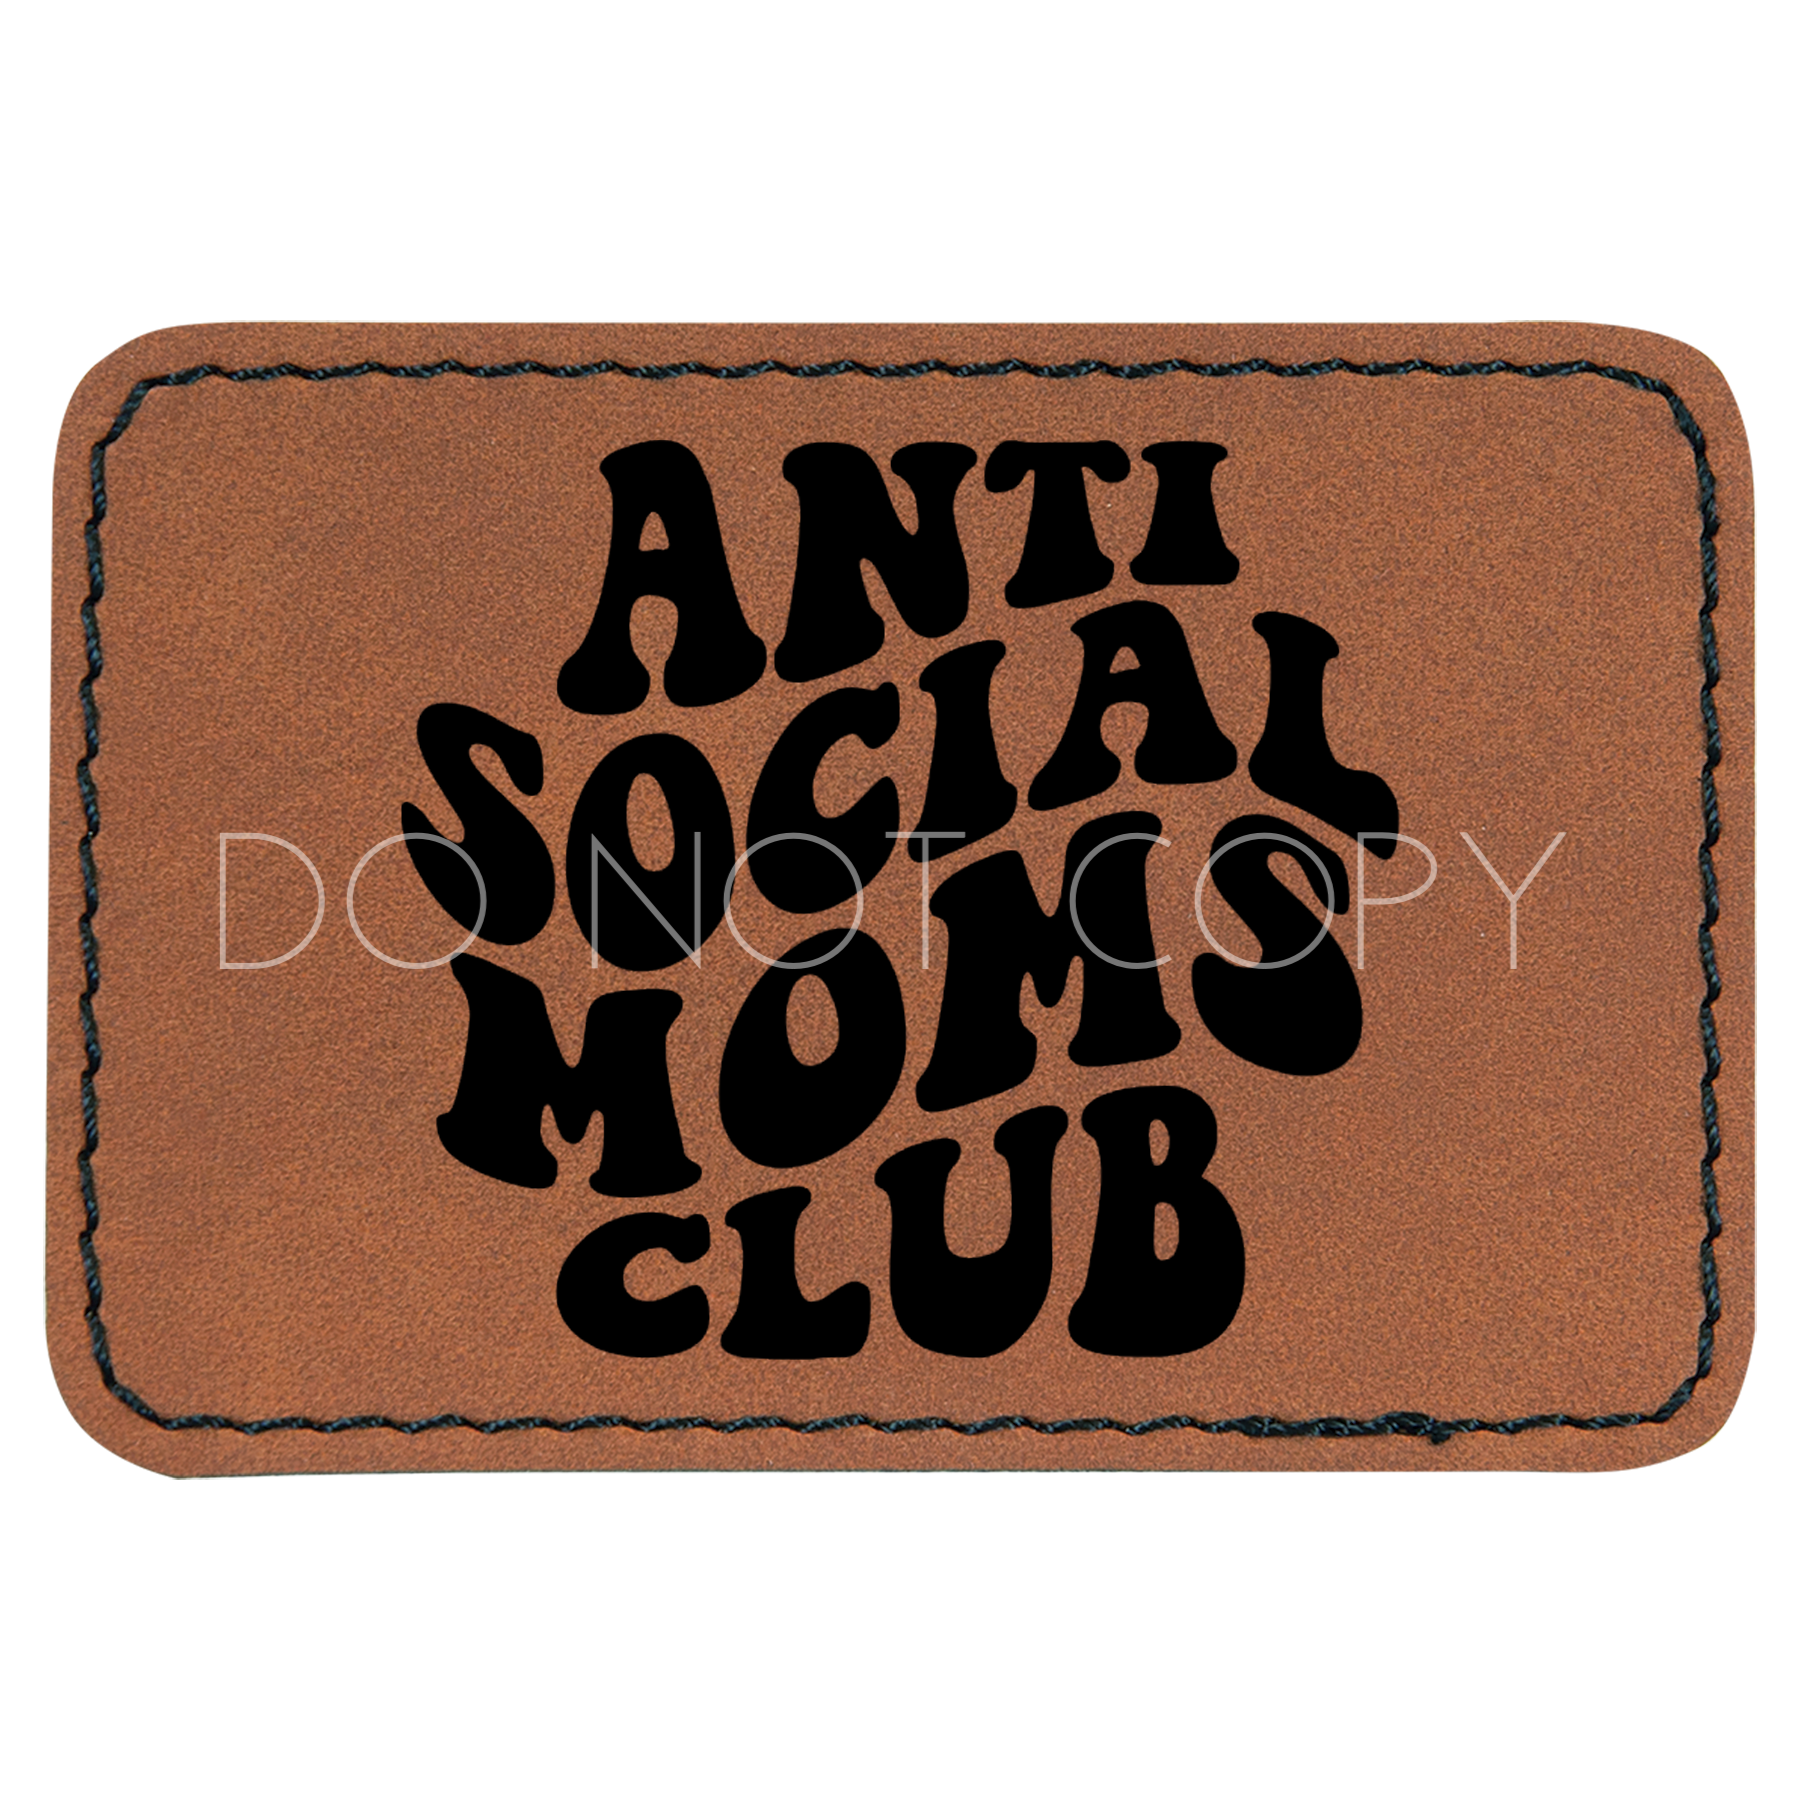 Anti Social Moms Club Patch